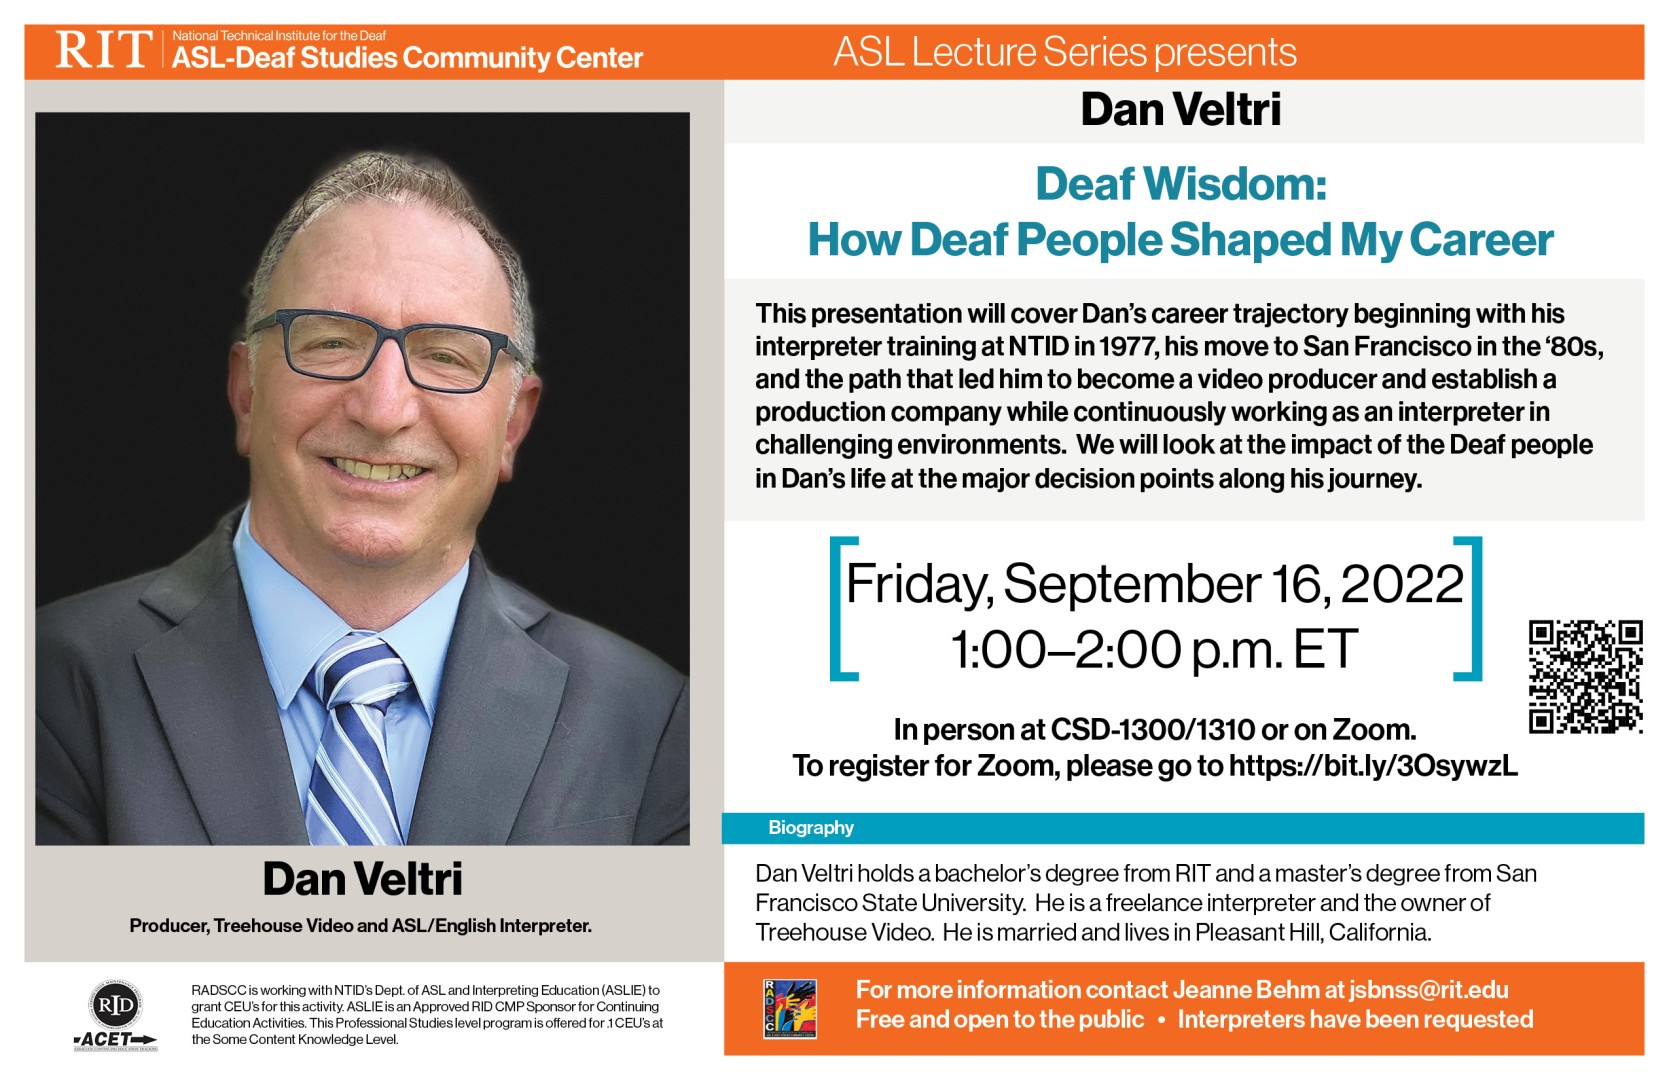 Flyer on ASL Lecture Series: Dan Veltri for Friday, Sept. 16, 2022